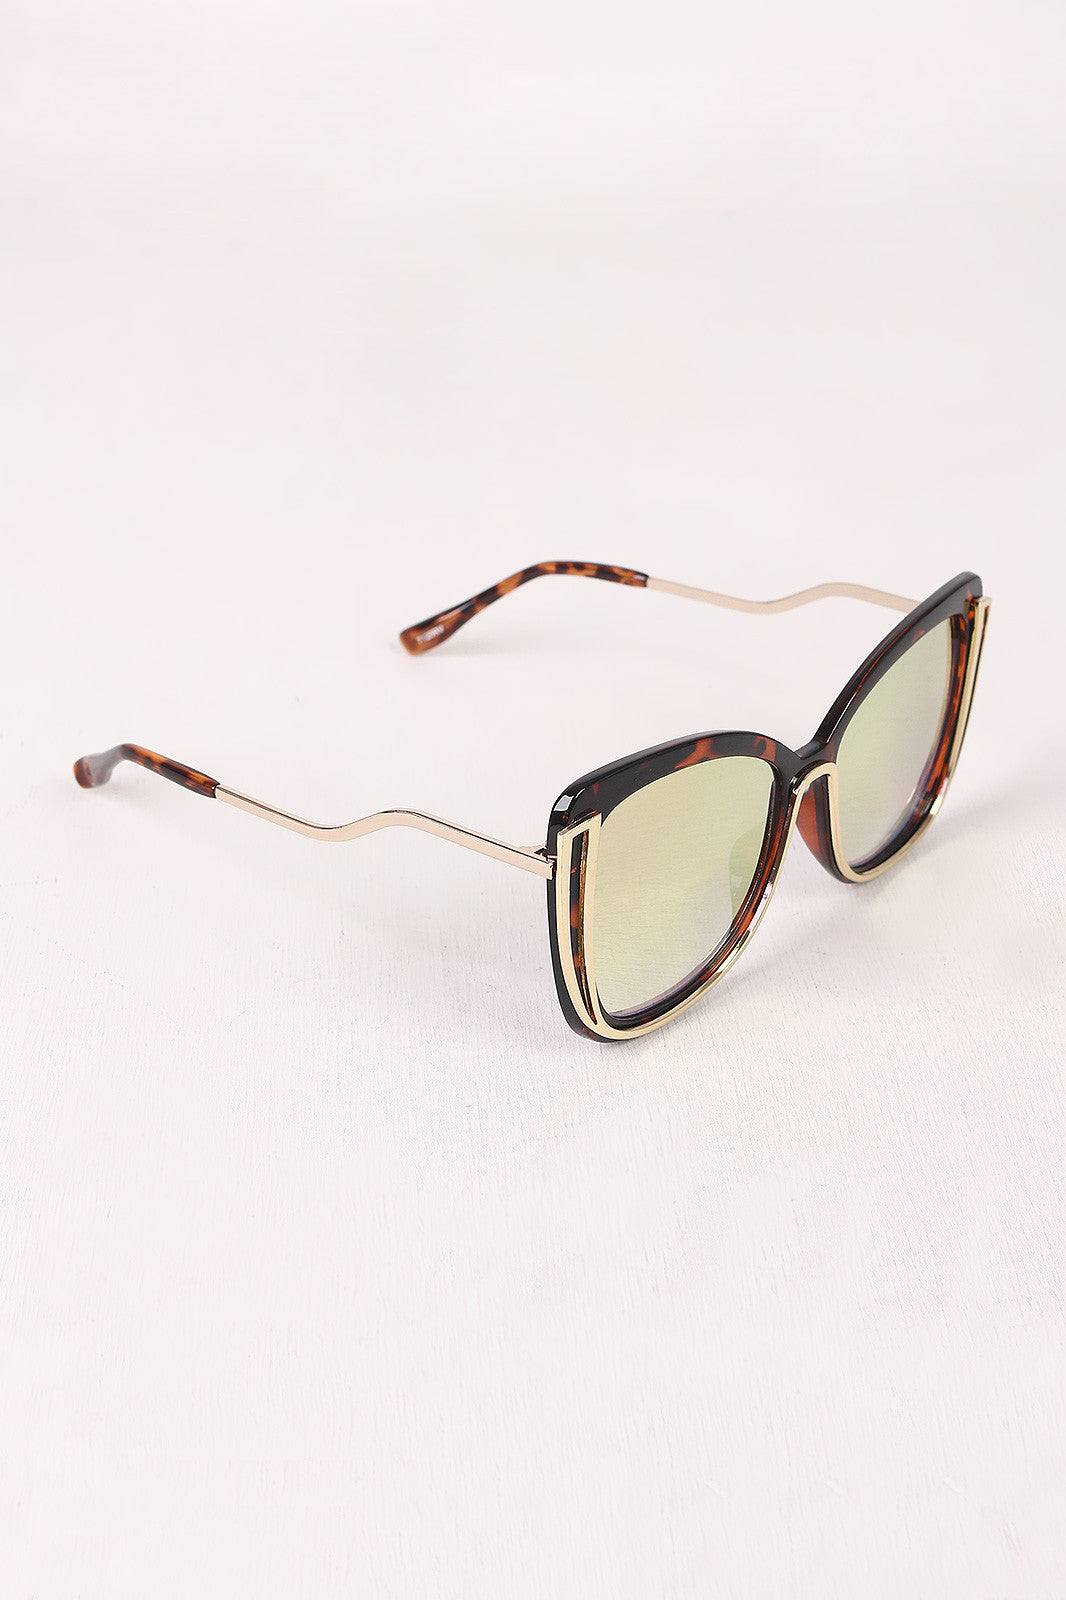 Butterfly Sunglasses Semi Cat Eye Glasses Plastic Frame Clear